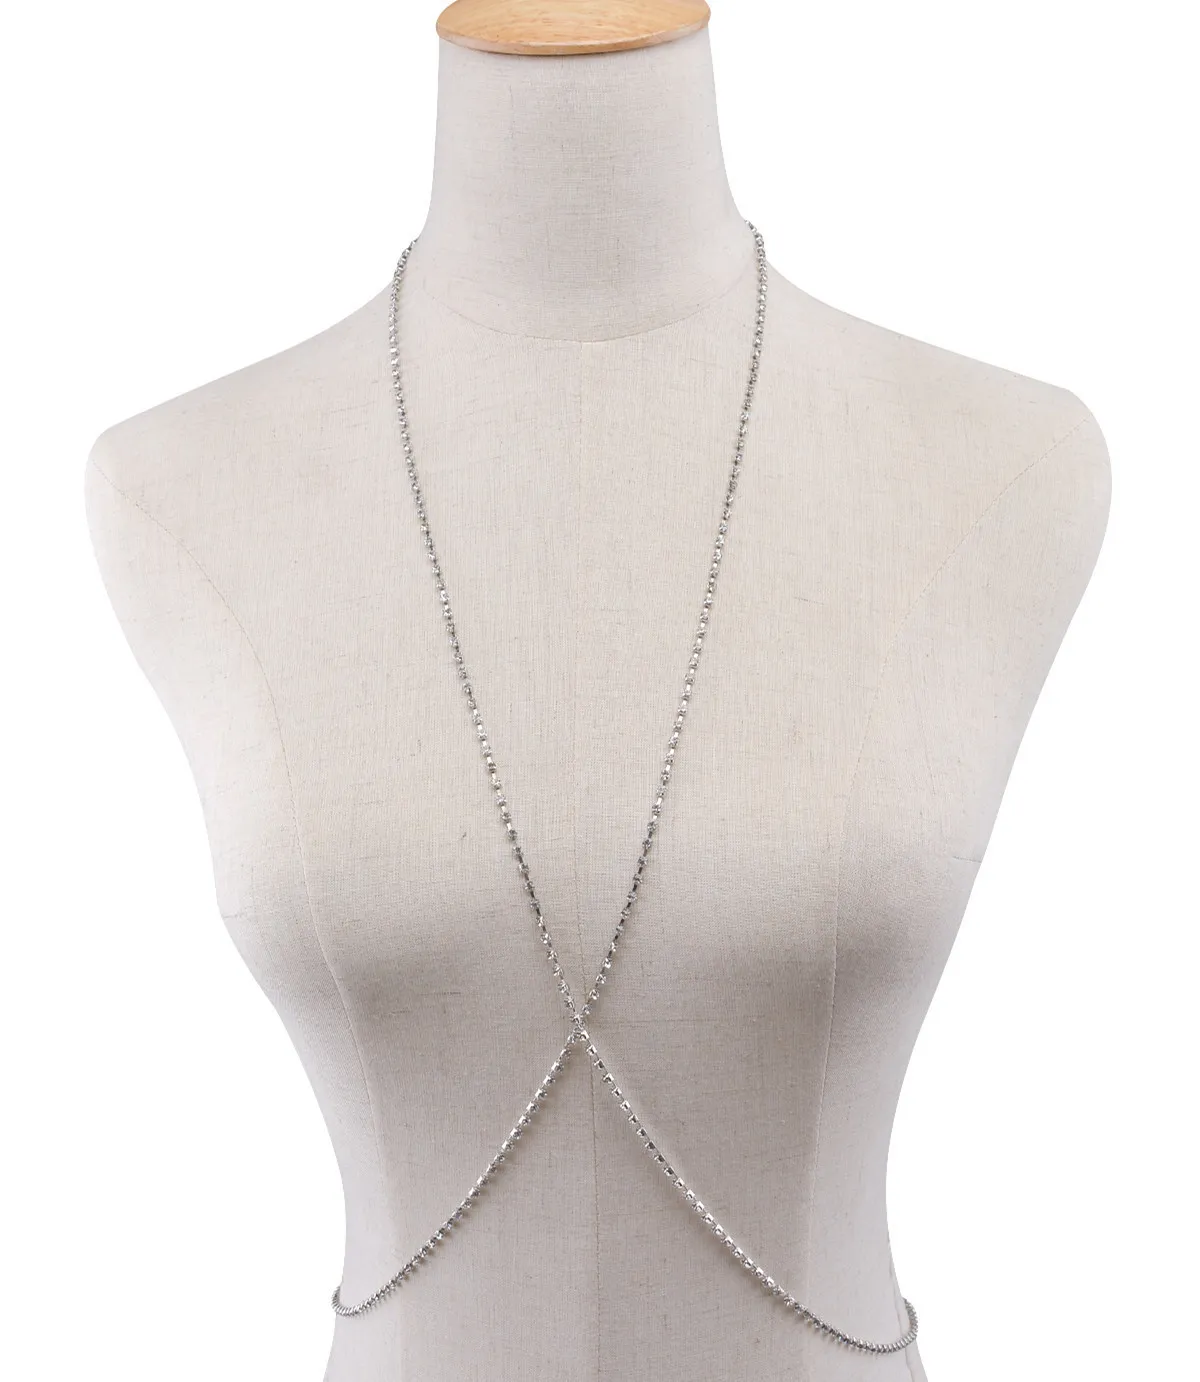 Brand Claw Crystal Bra Slave Harness Body Chain Women Rhinestone Crossover Necklace Pendant Bikini beach Fashion Body jewelry